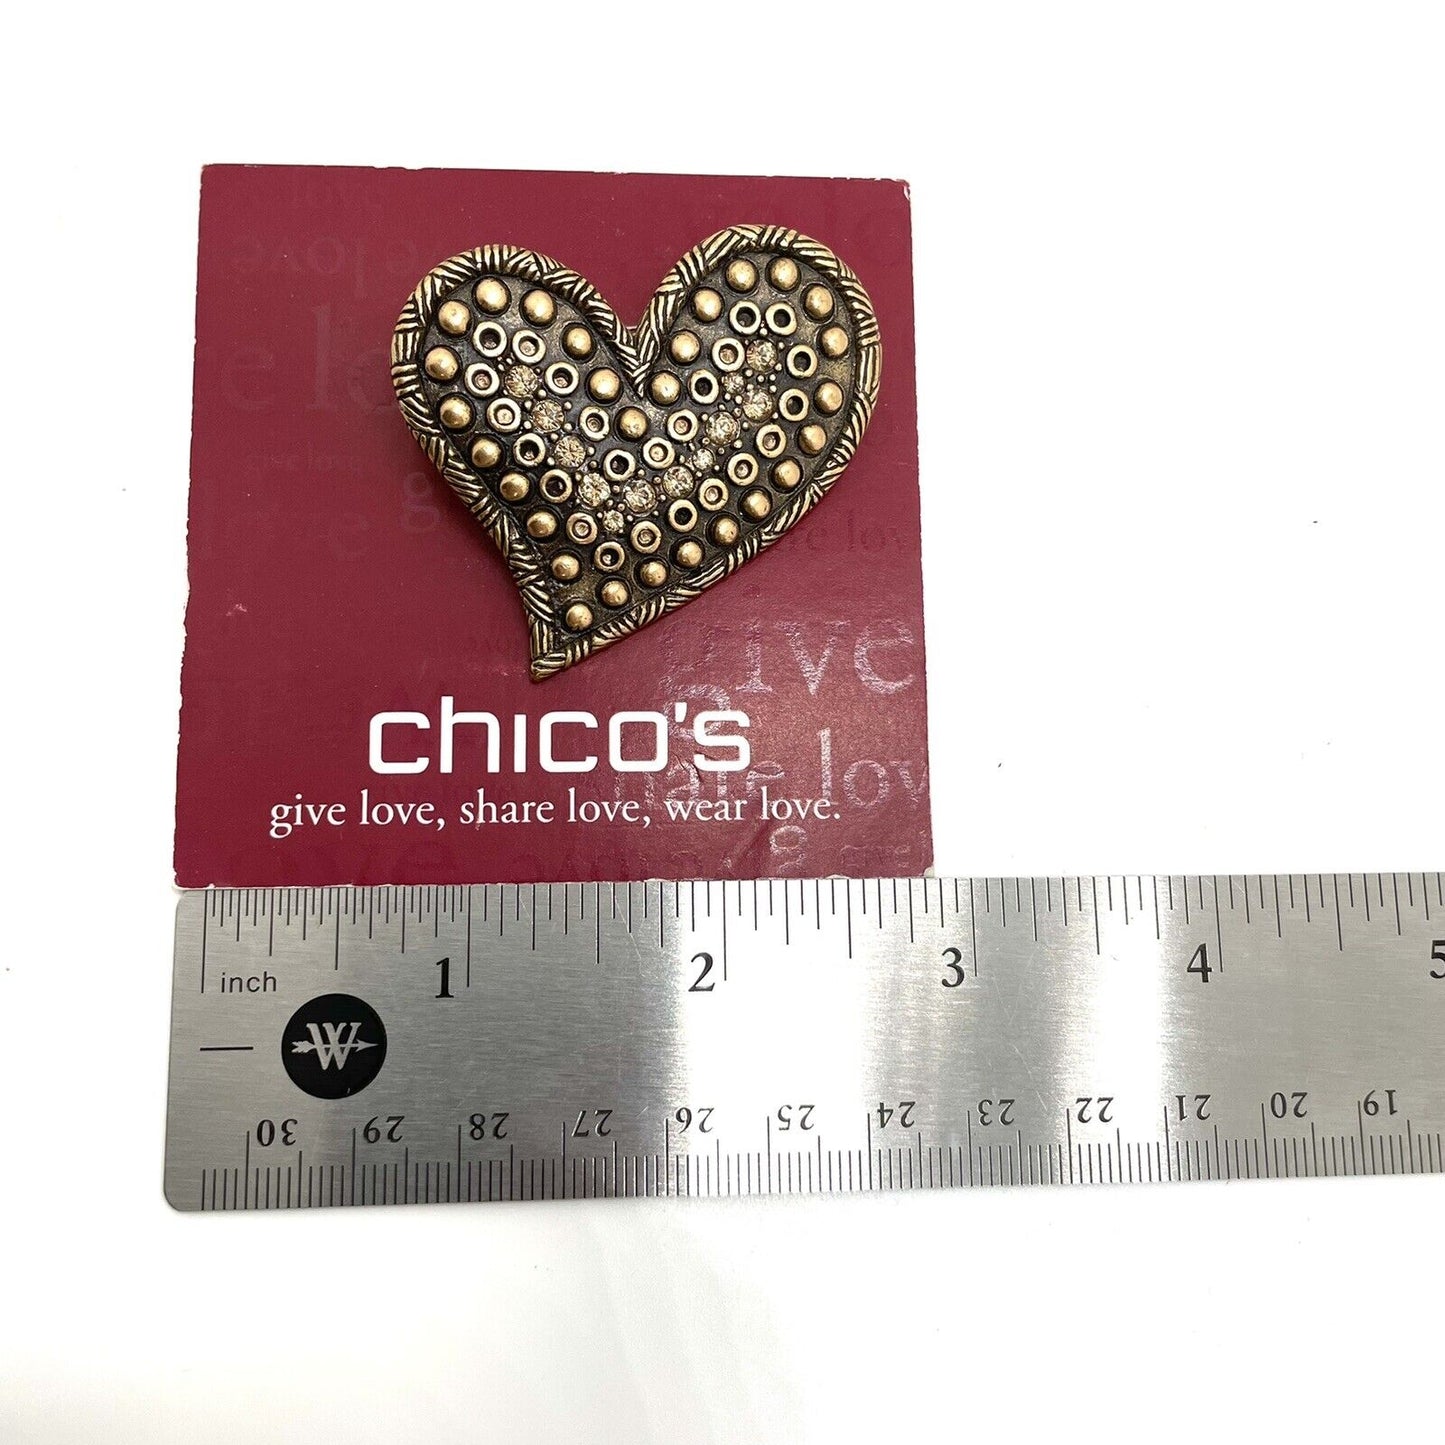 Chico’s Heart Pin